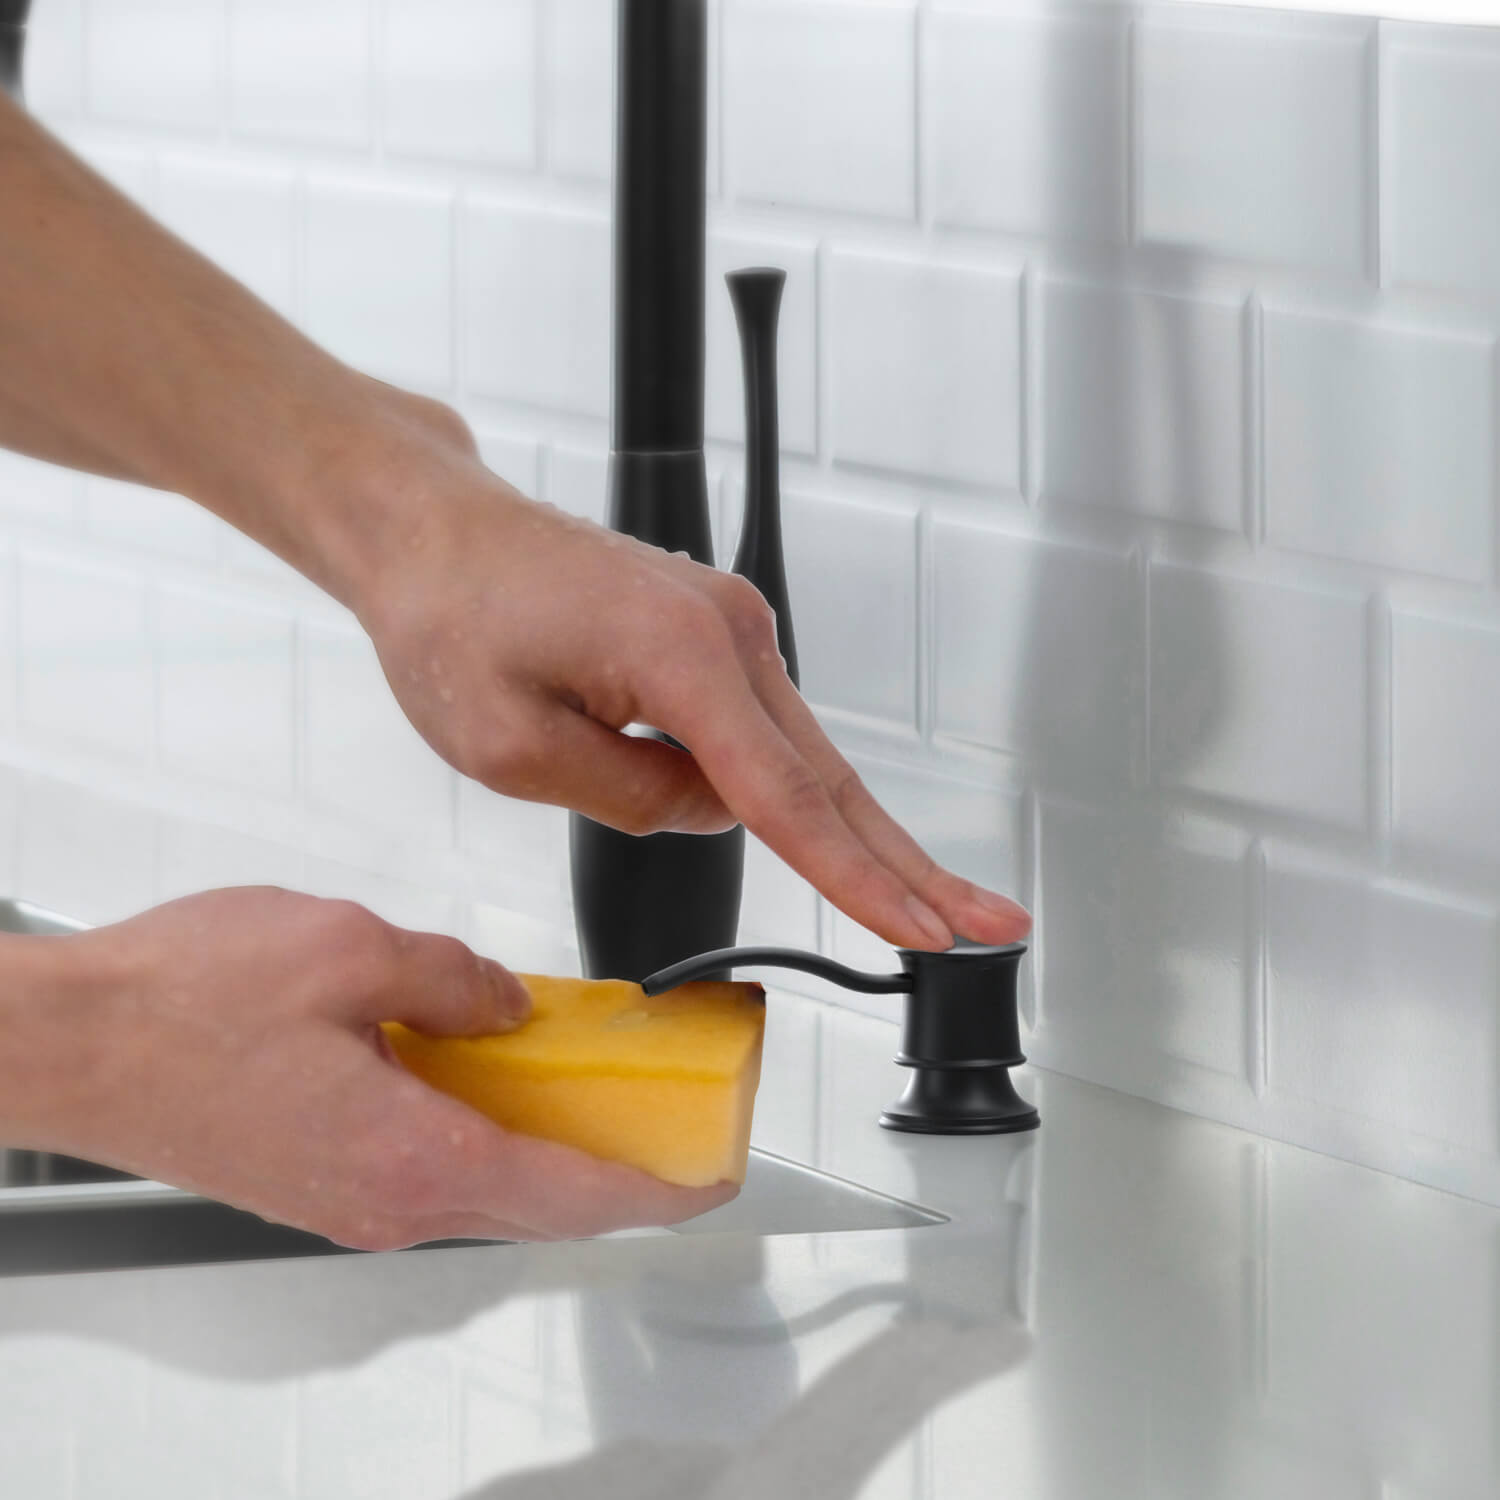 Kibi KSD101 Kitchen Soap Dispenser in Matte Black Finish